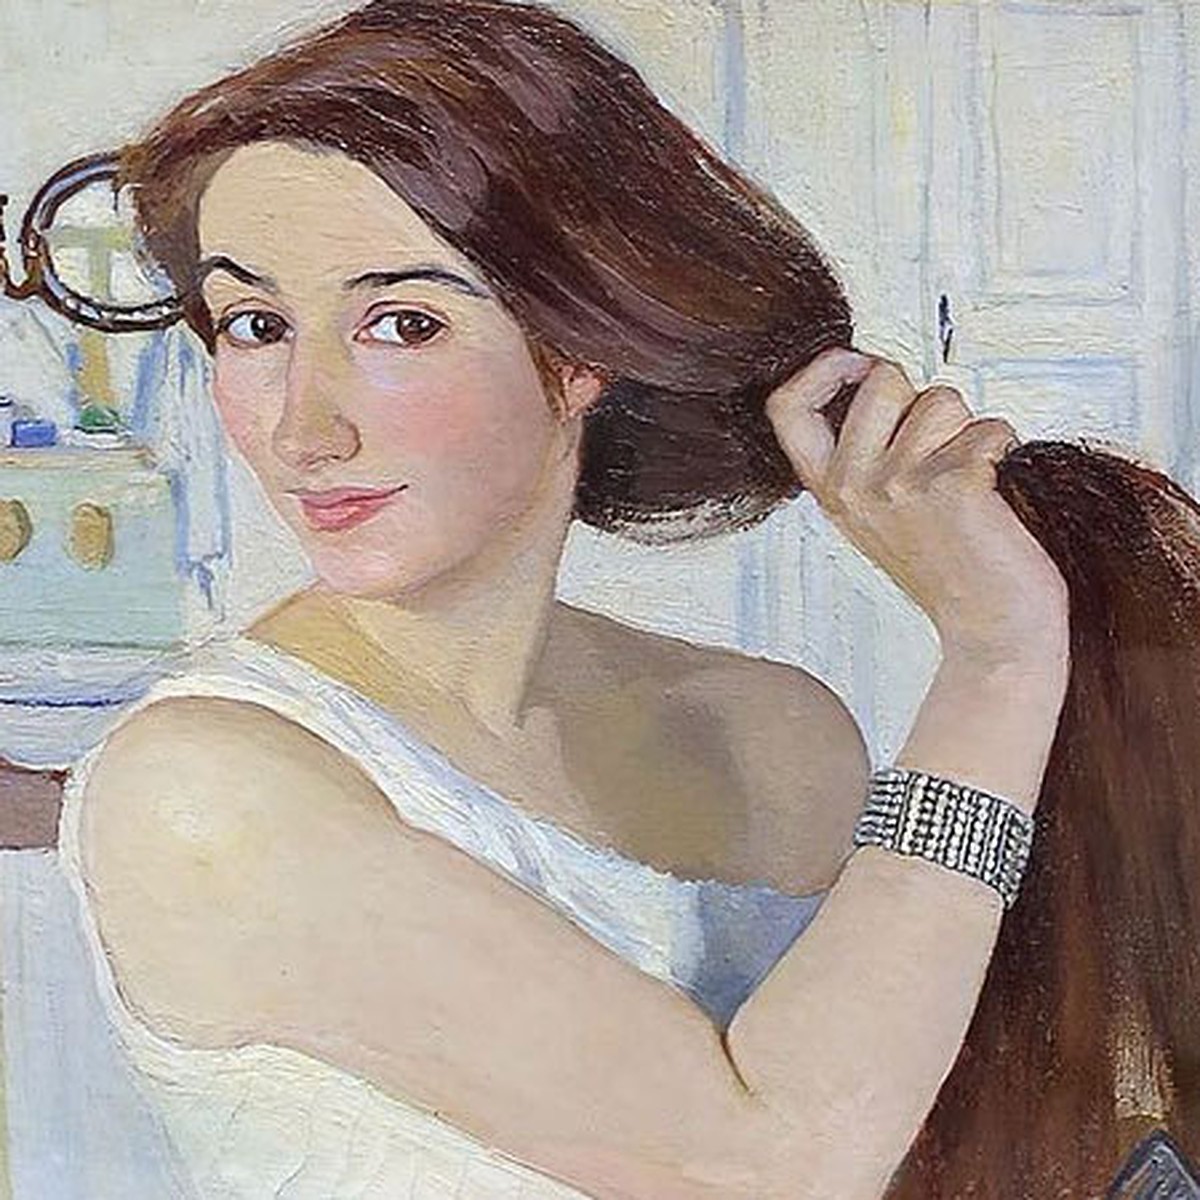 Зинаида Серебрякова, автопортрет (1909)